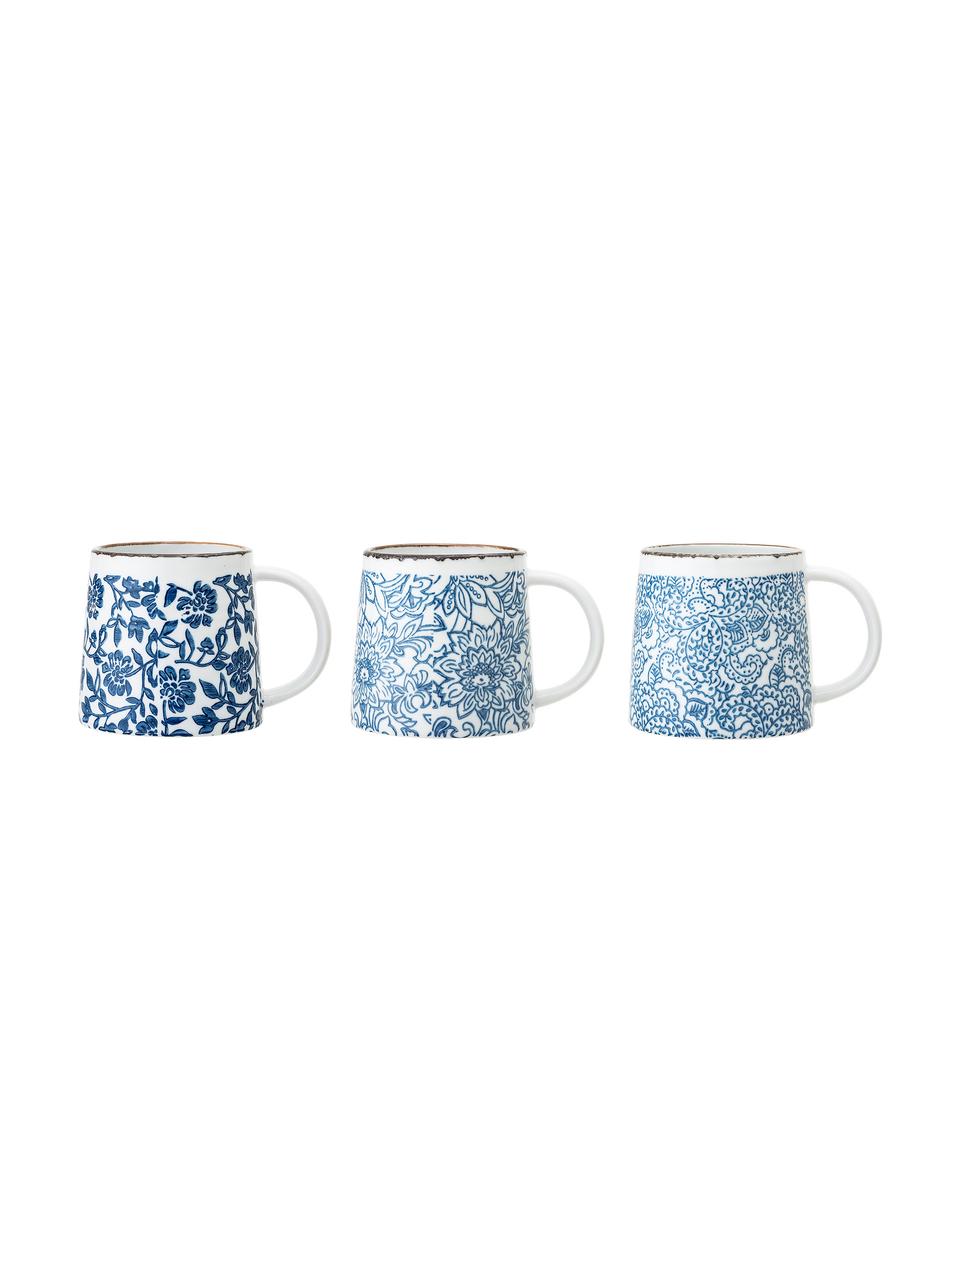 Set 3 tazze fatte a mano con motivo floreale blu Molly, Gres, Bianco, tonalità blu, Ø 10 x Alt. 10 cm, 400 ml